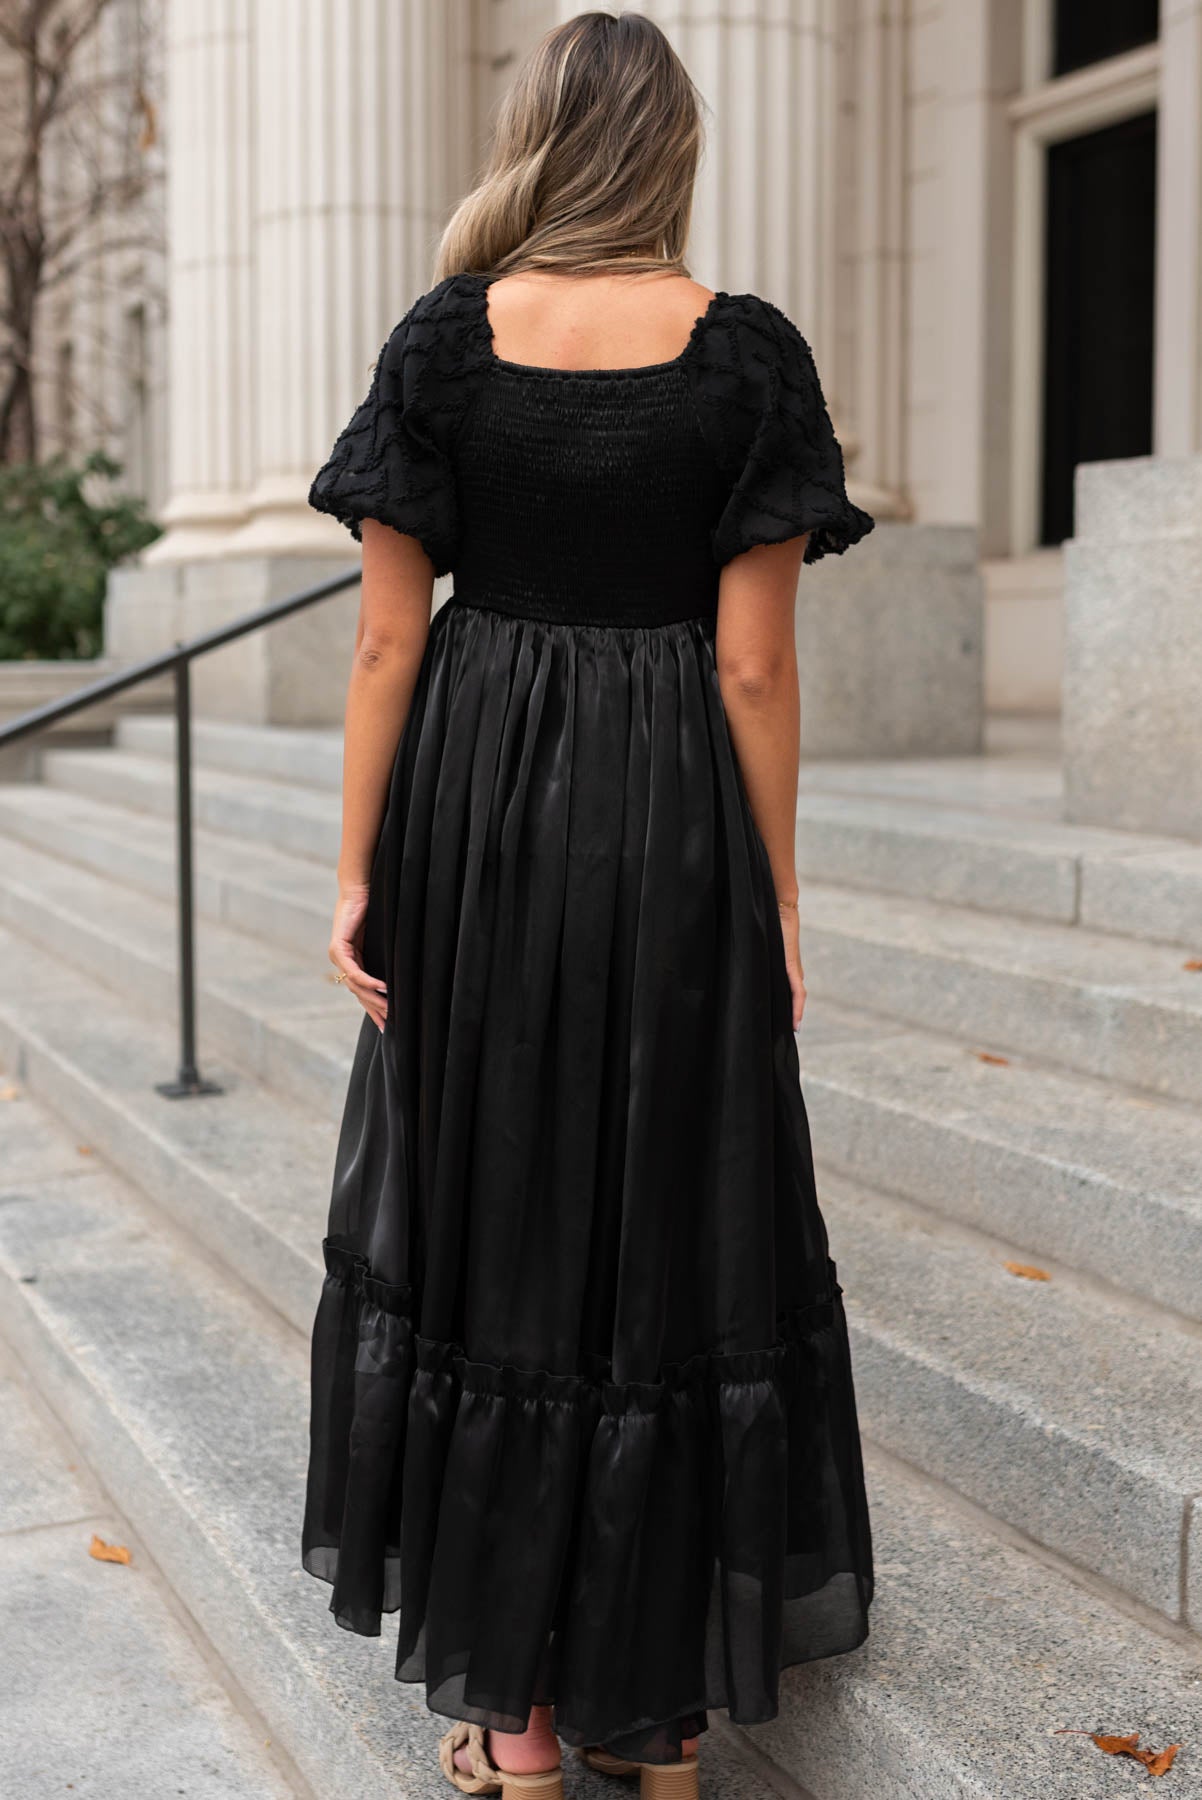 Back view of a black organza dress